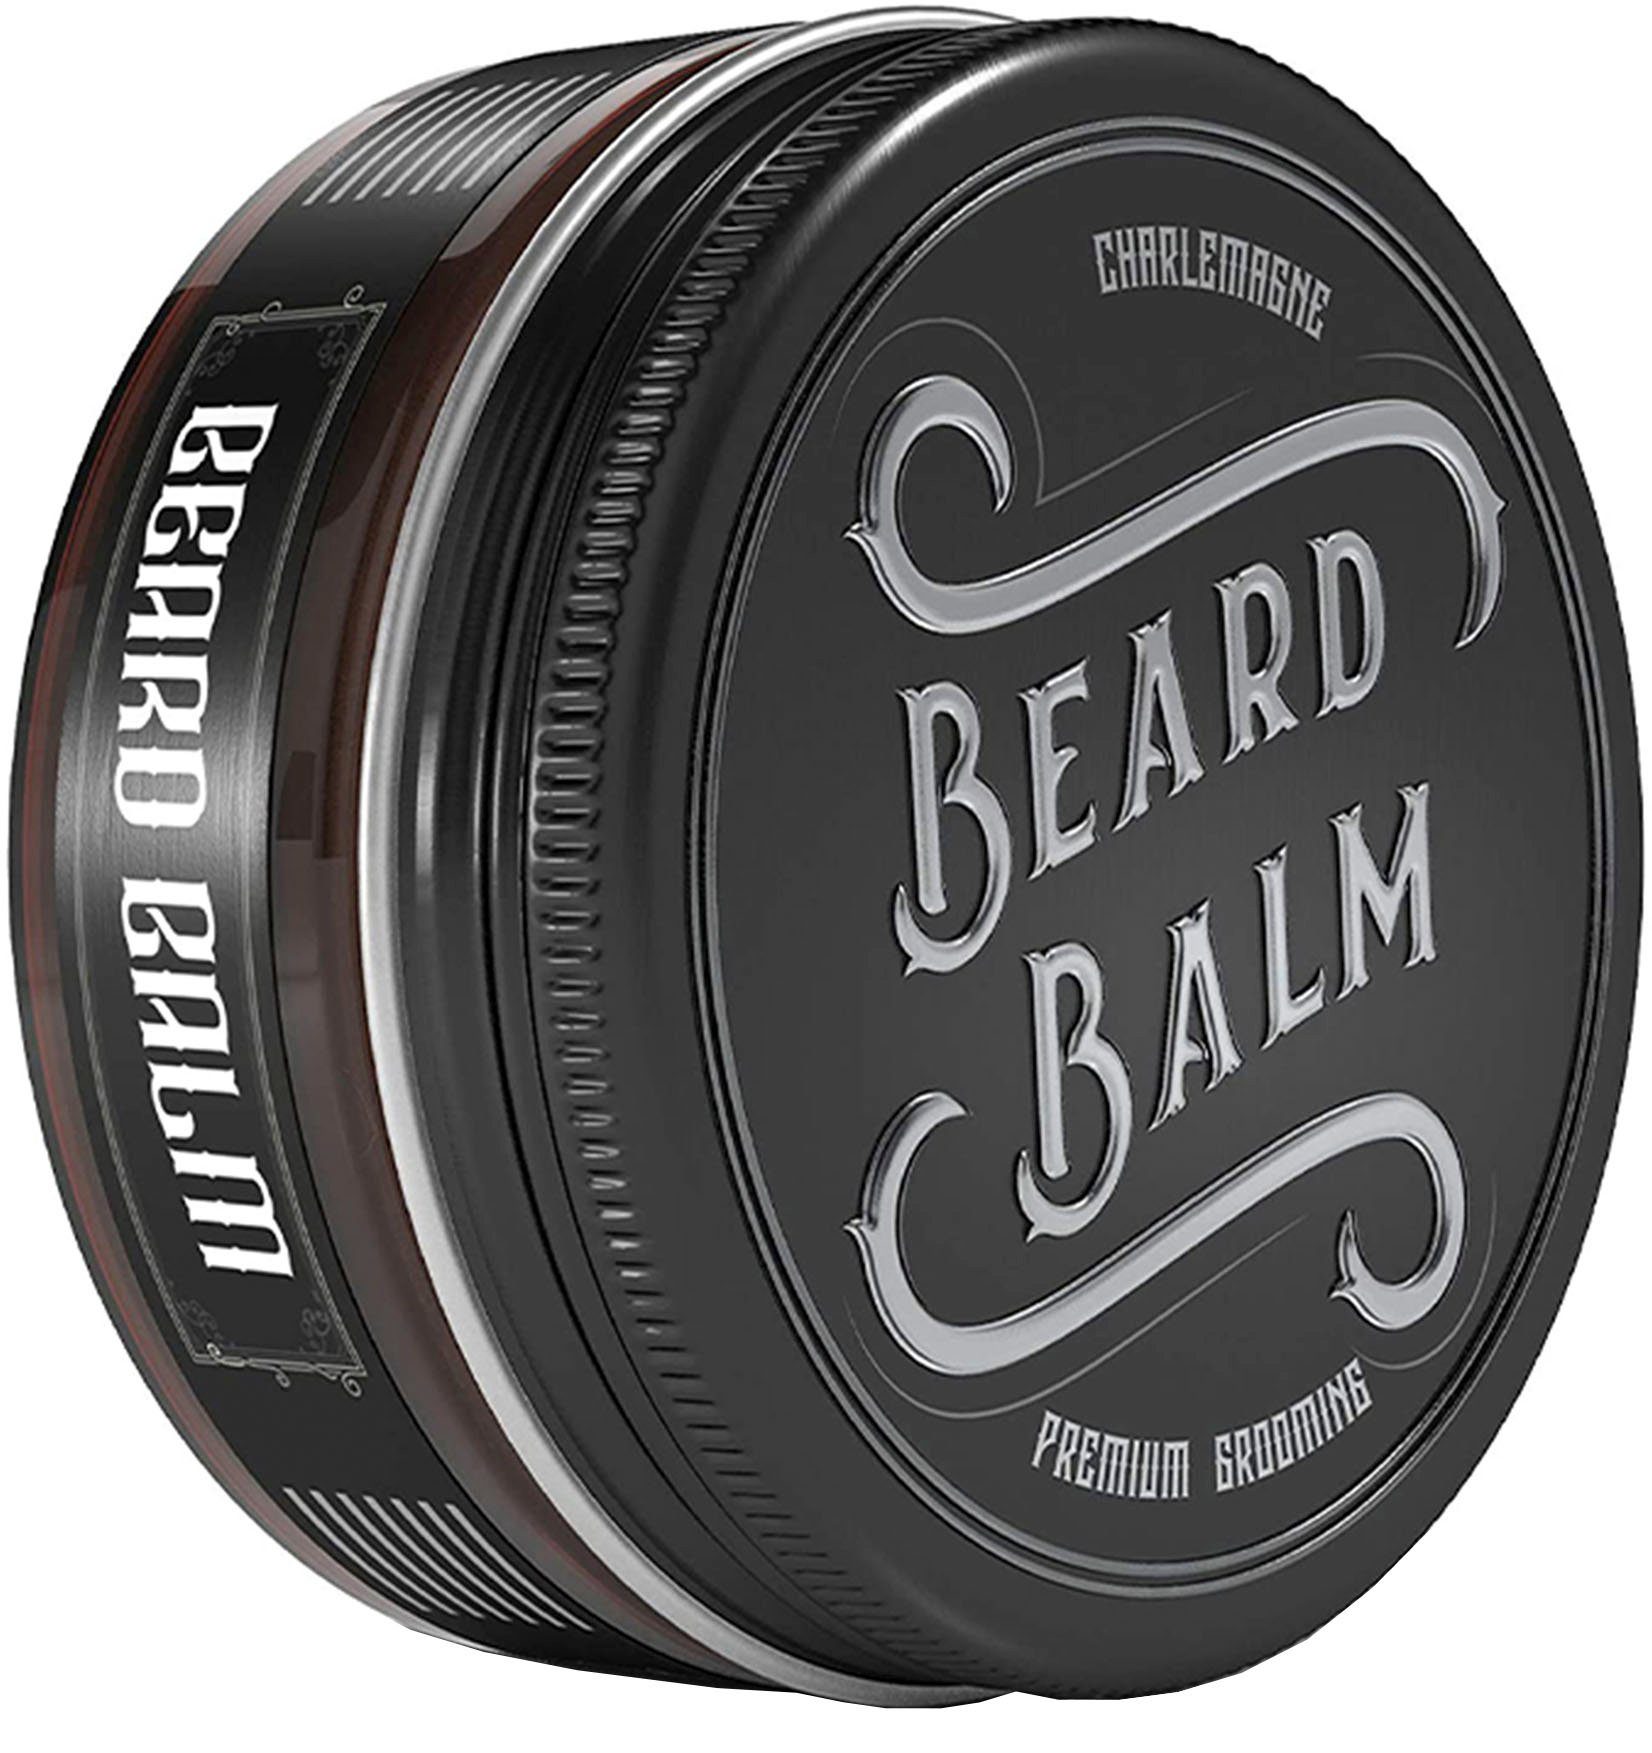 Beard Bartbalsam Balm CHARLEMAGNE